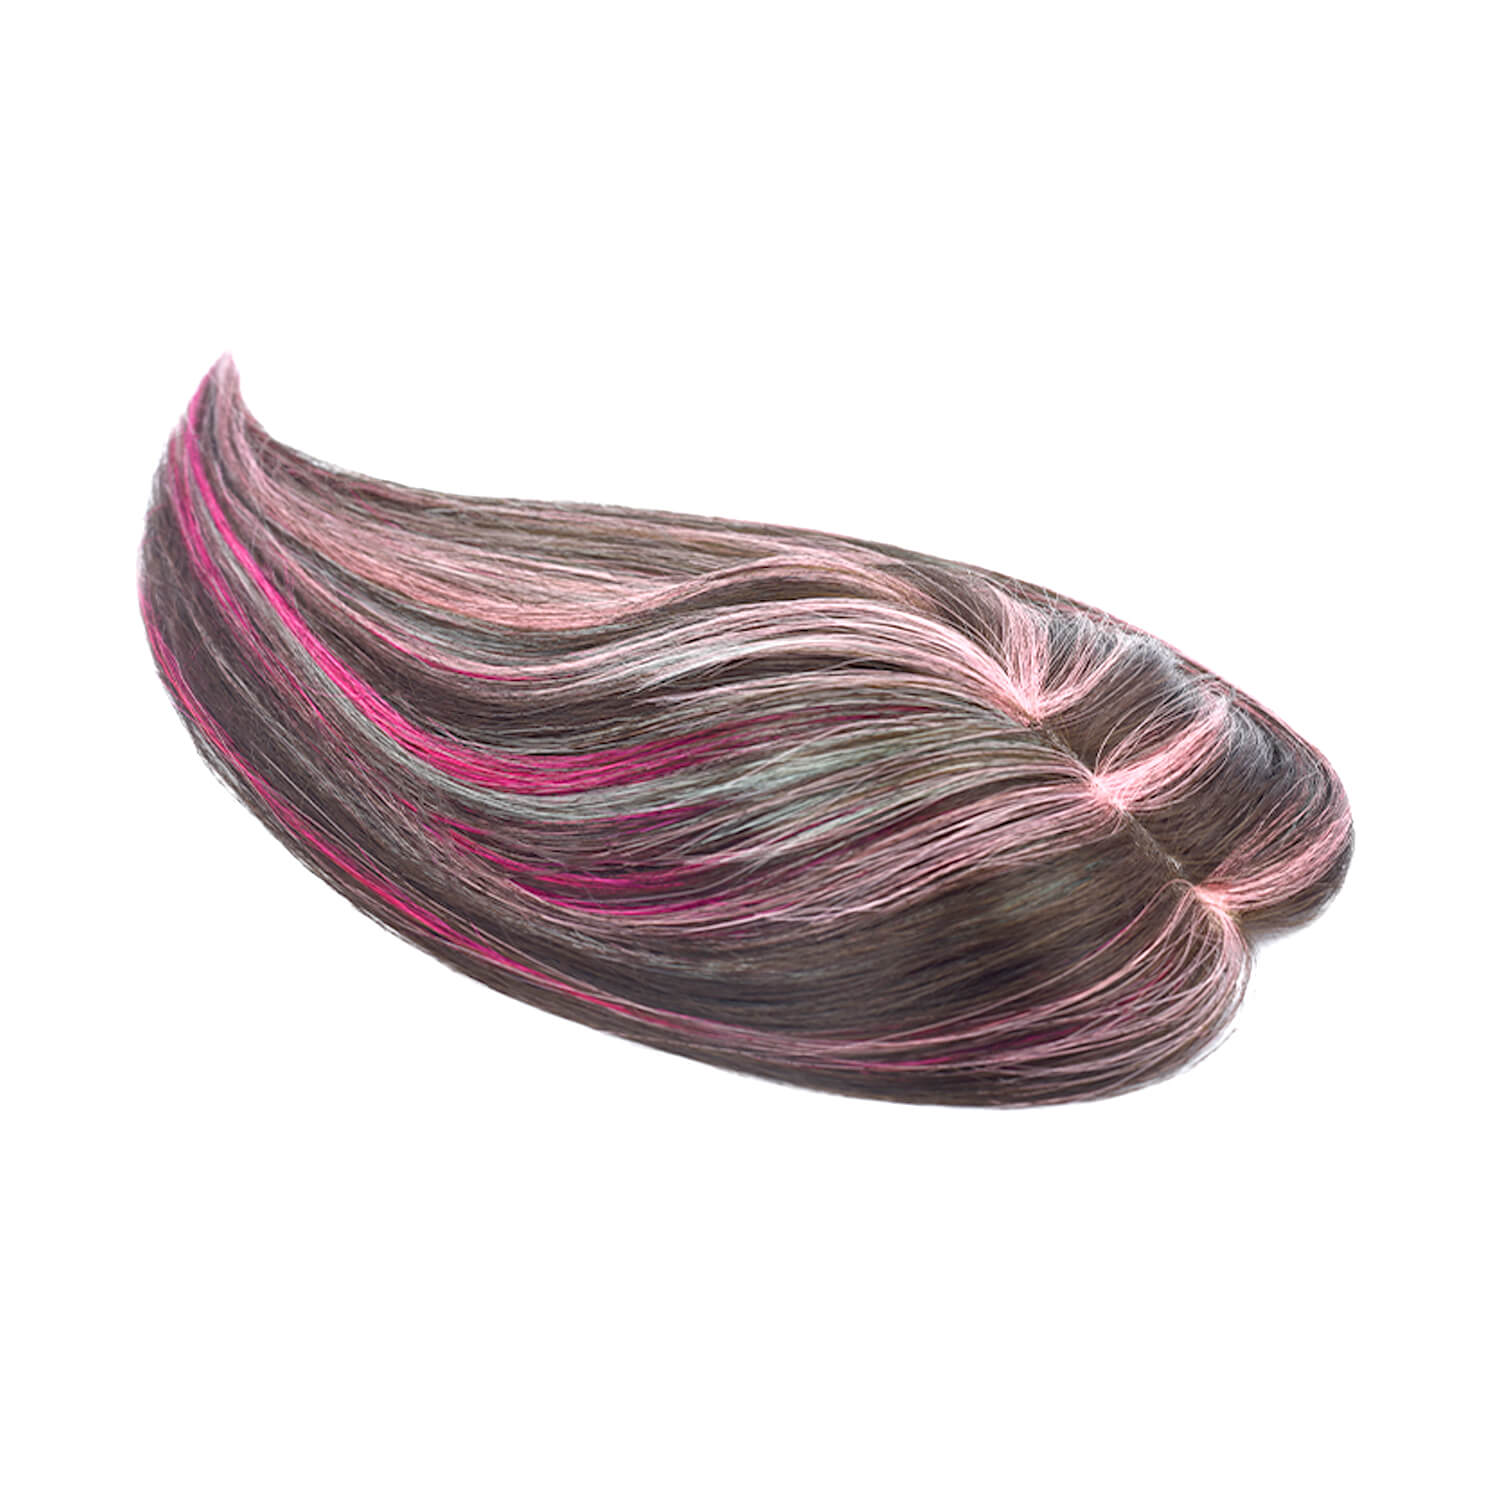 Hydrangea ︳Pink Highlights 3x5" Mono Top Human Hair Topper